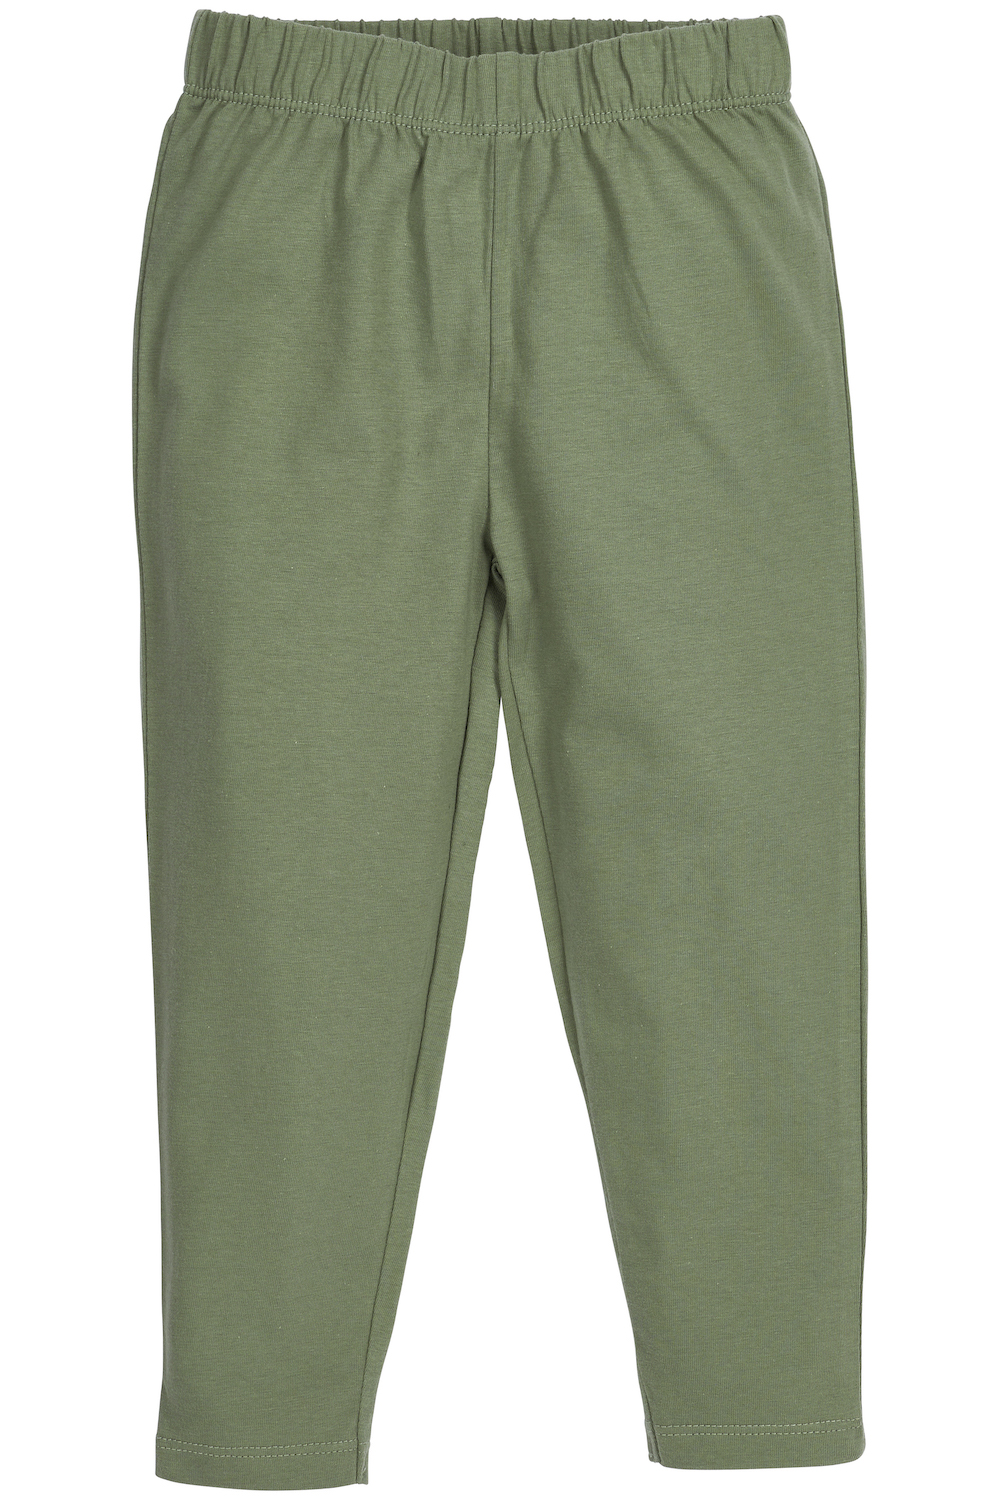 Pyjama 2-pack Cheetah - Forest Green - Maat 98/104